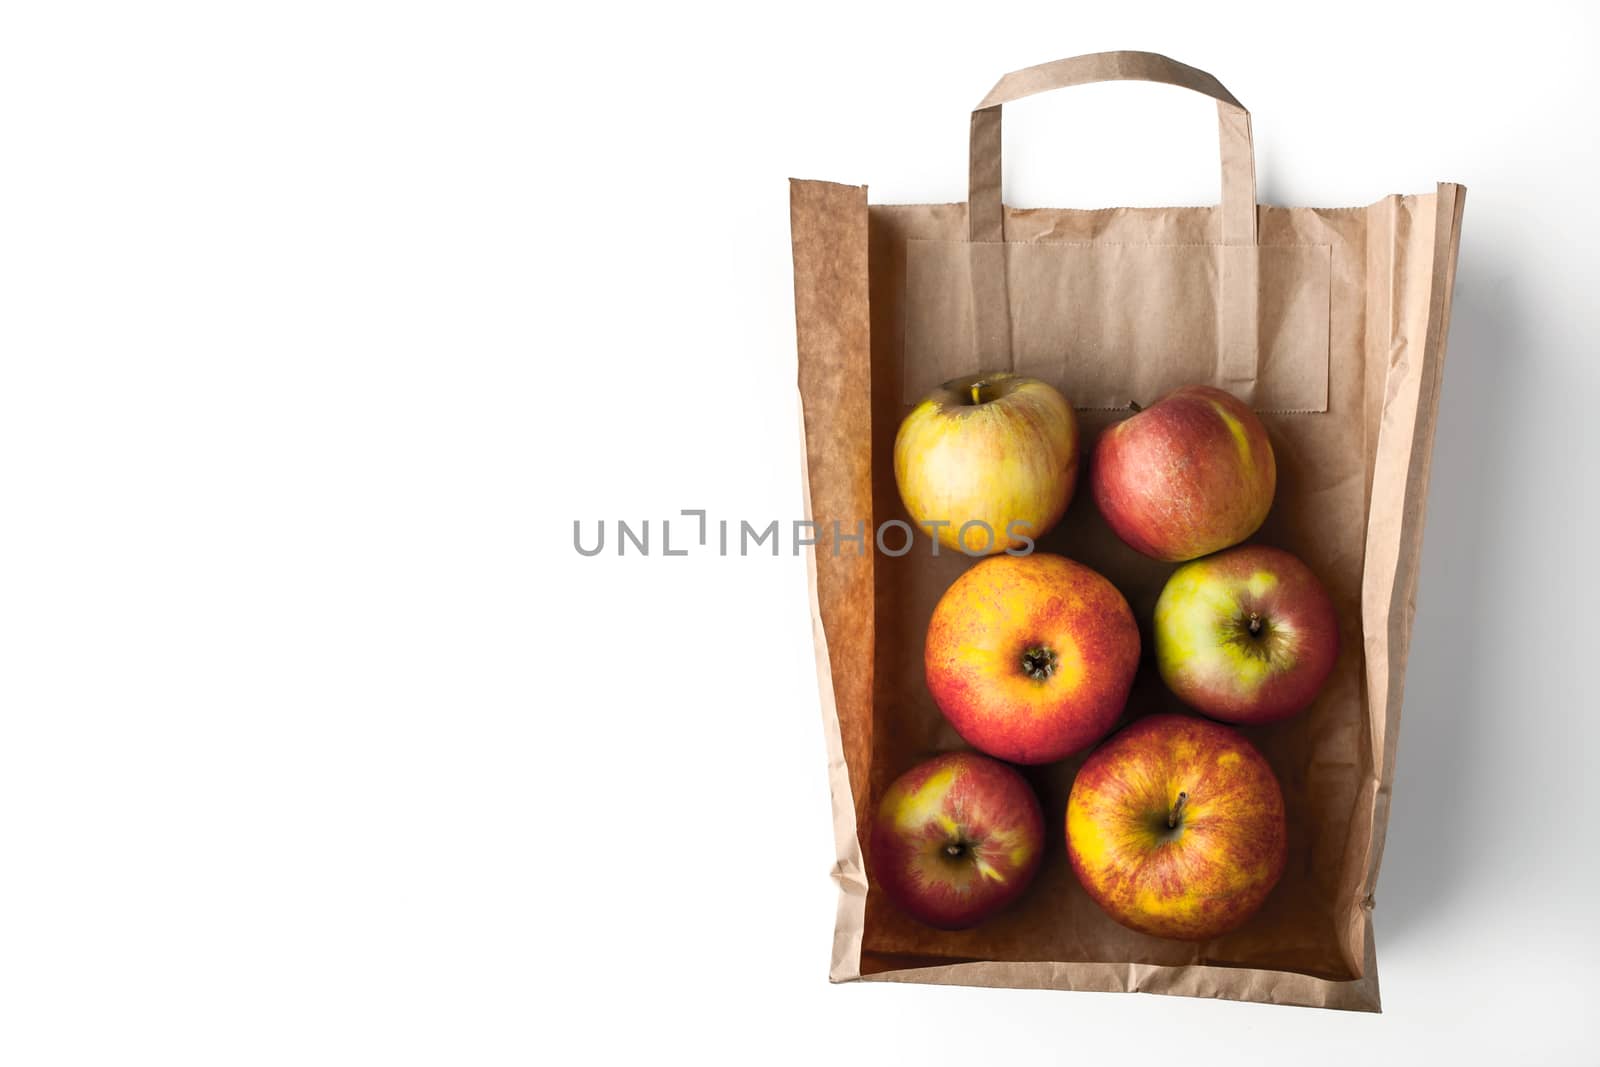 Apples inside by Deniskarpenkov